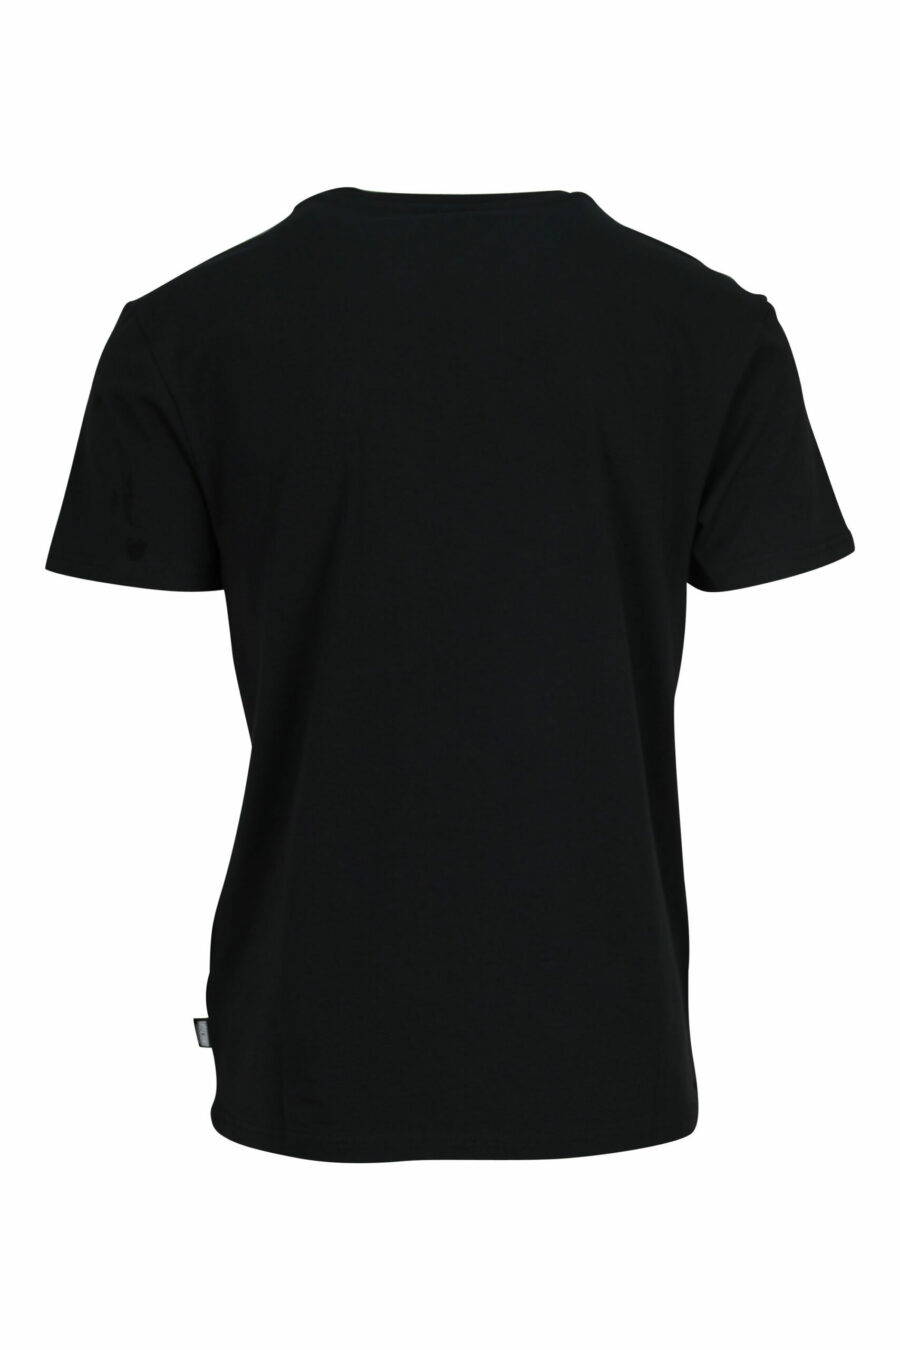 Camiseta negra con minilogo oso "underbear" en goma blanco - 667113602639 1 scaled